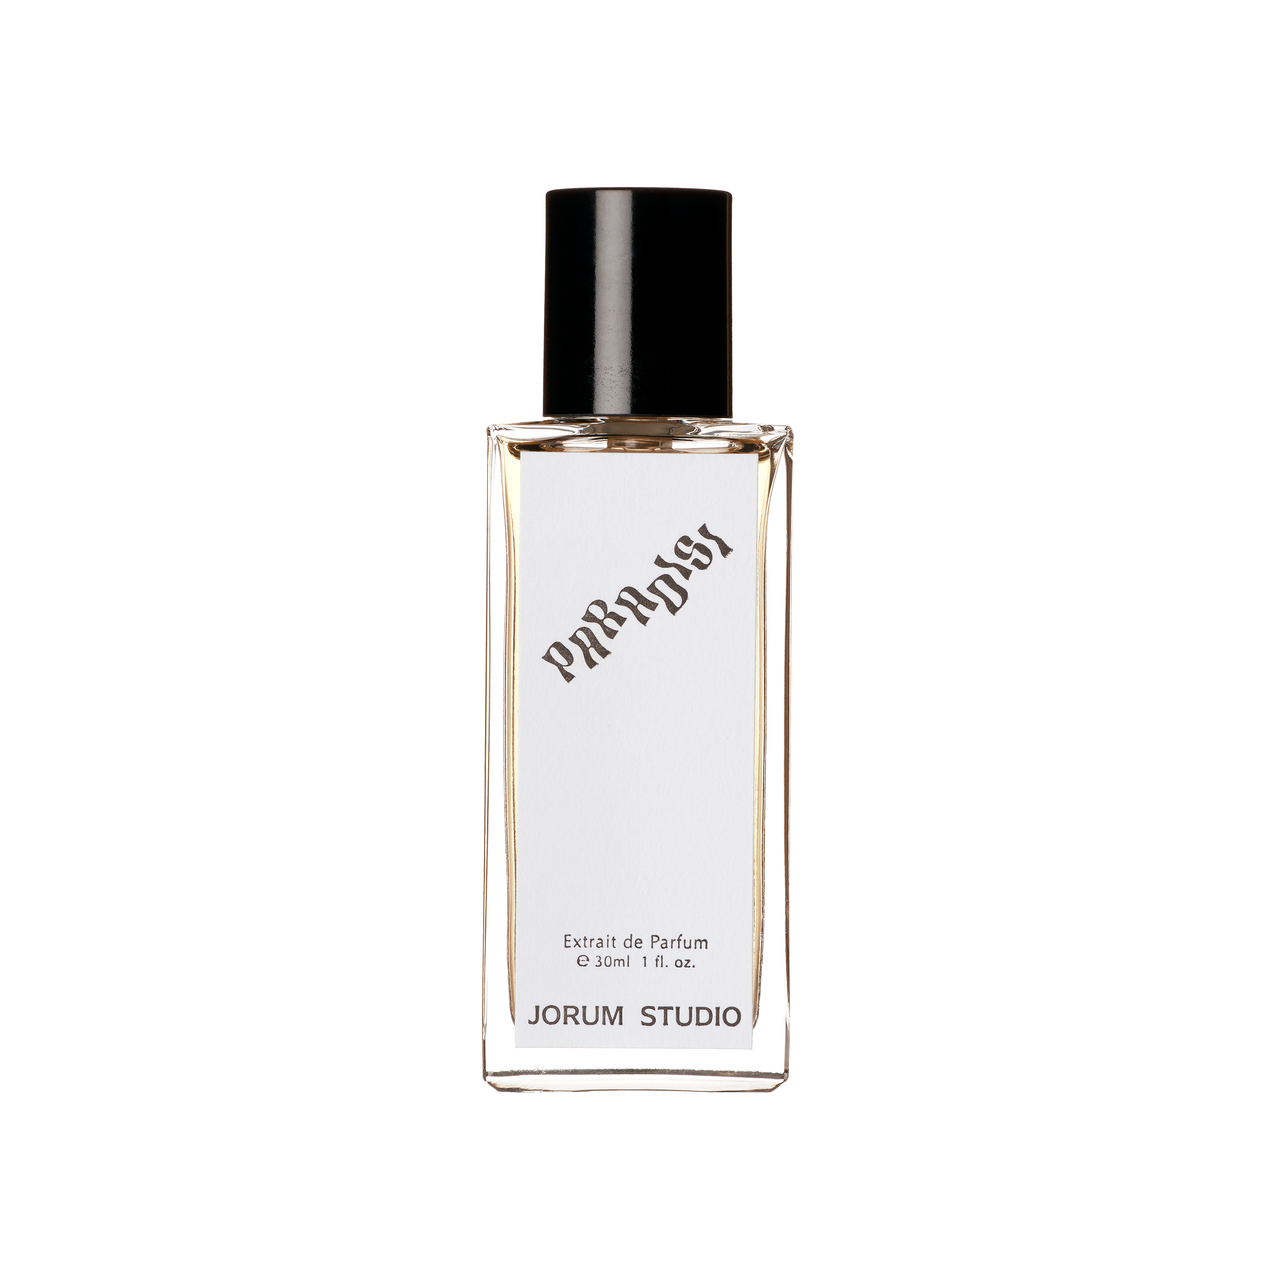 30ml bottle of Paradisi Extrait de Parfum by independent Scottish perfumers Jorum Studio